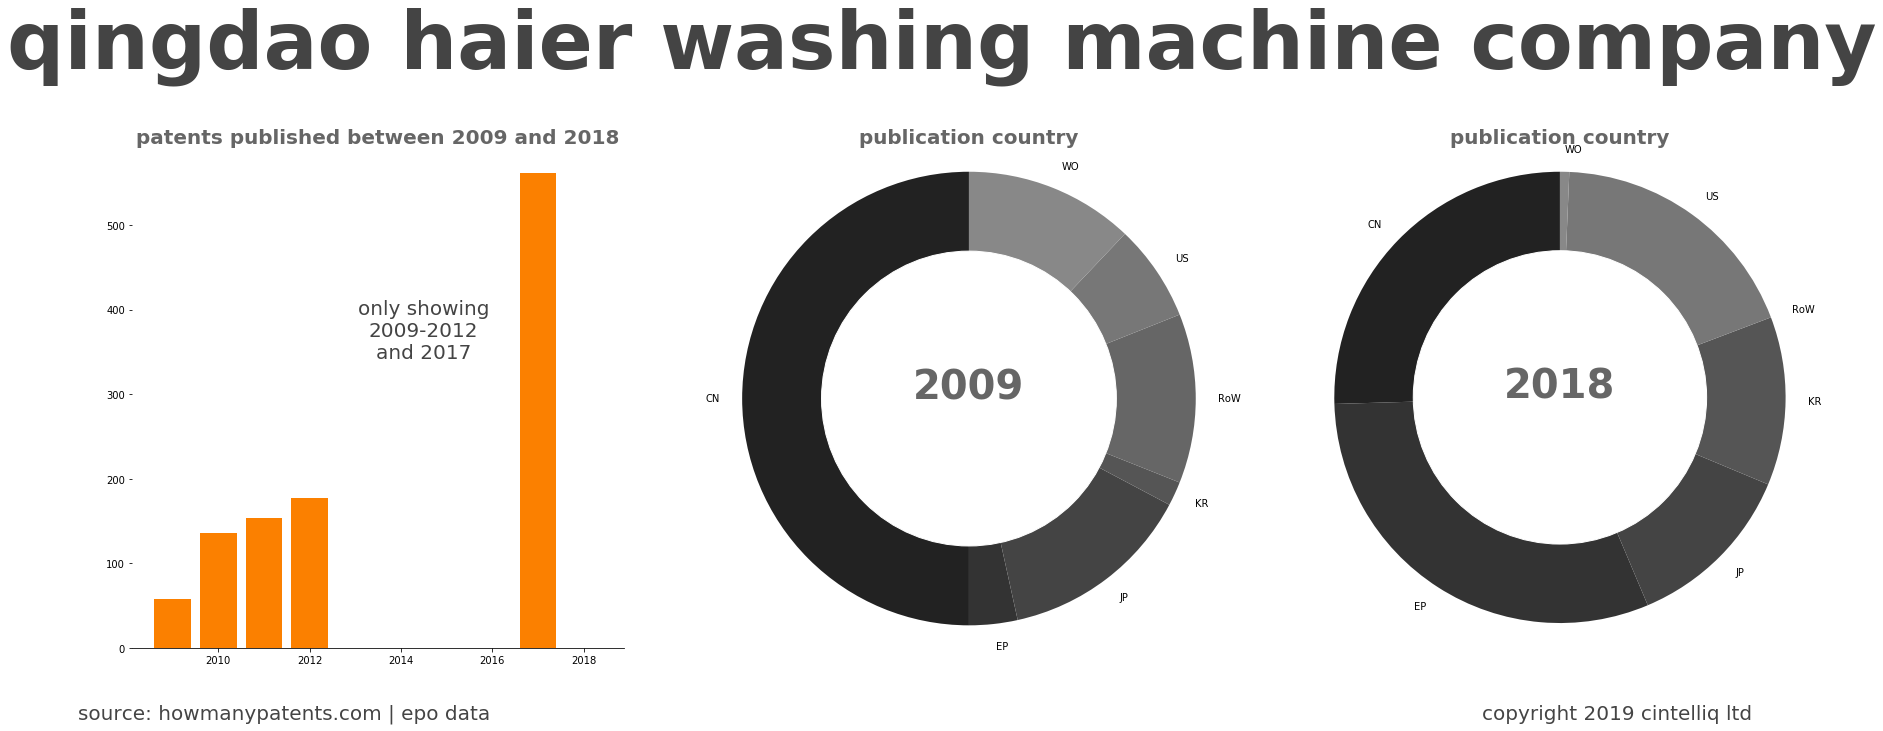 summary of patents for Qingdao Haier Washing Machine Company